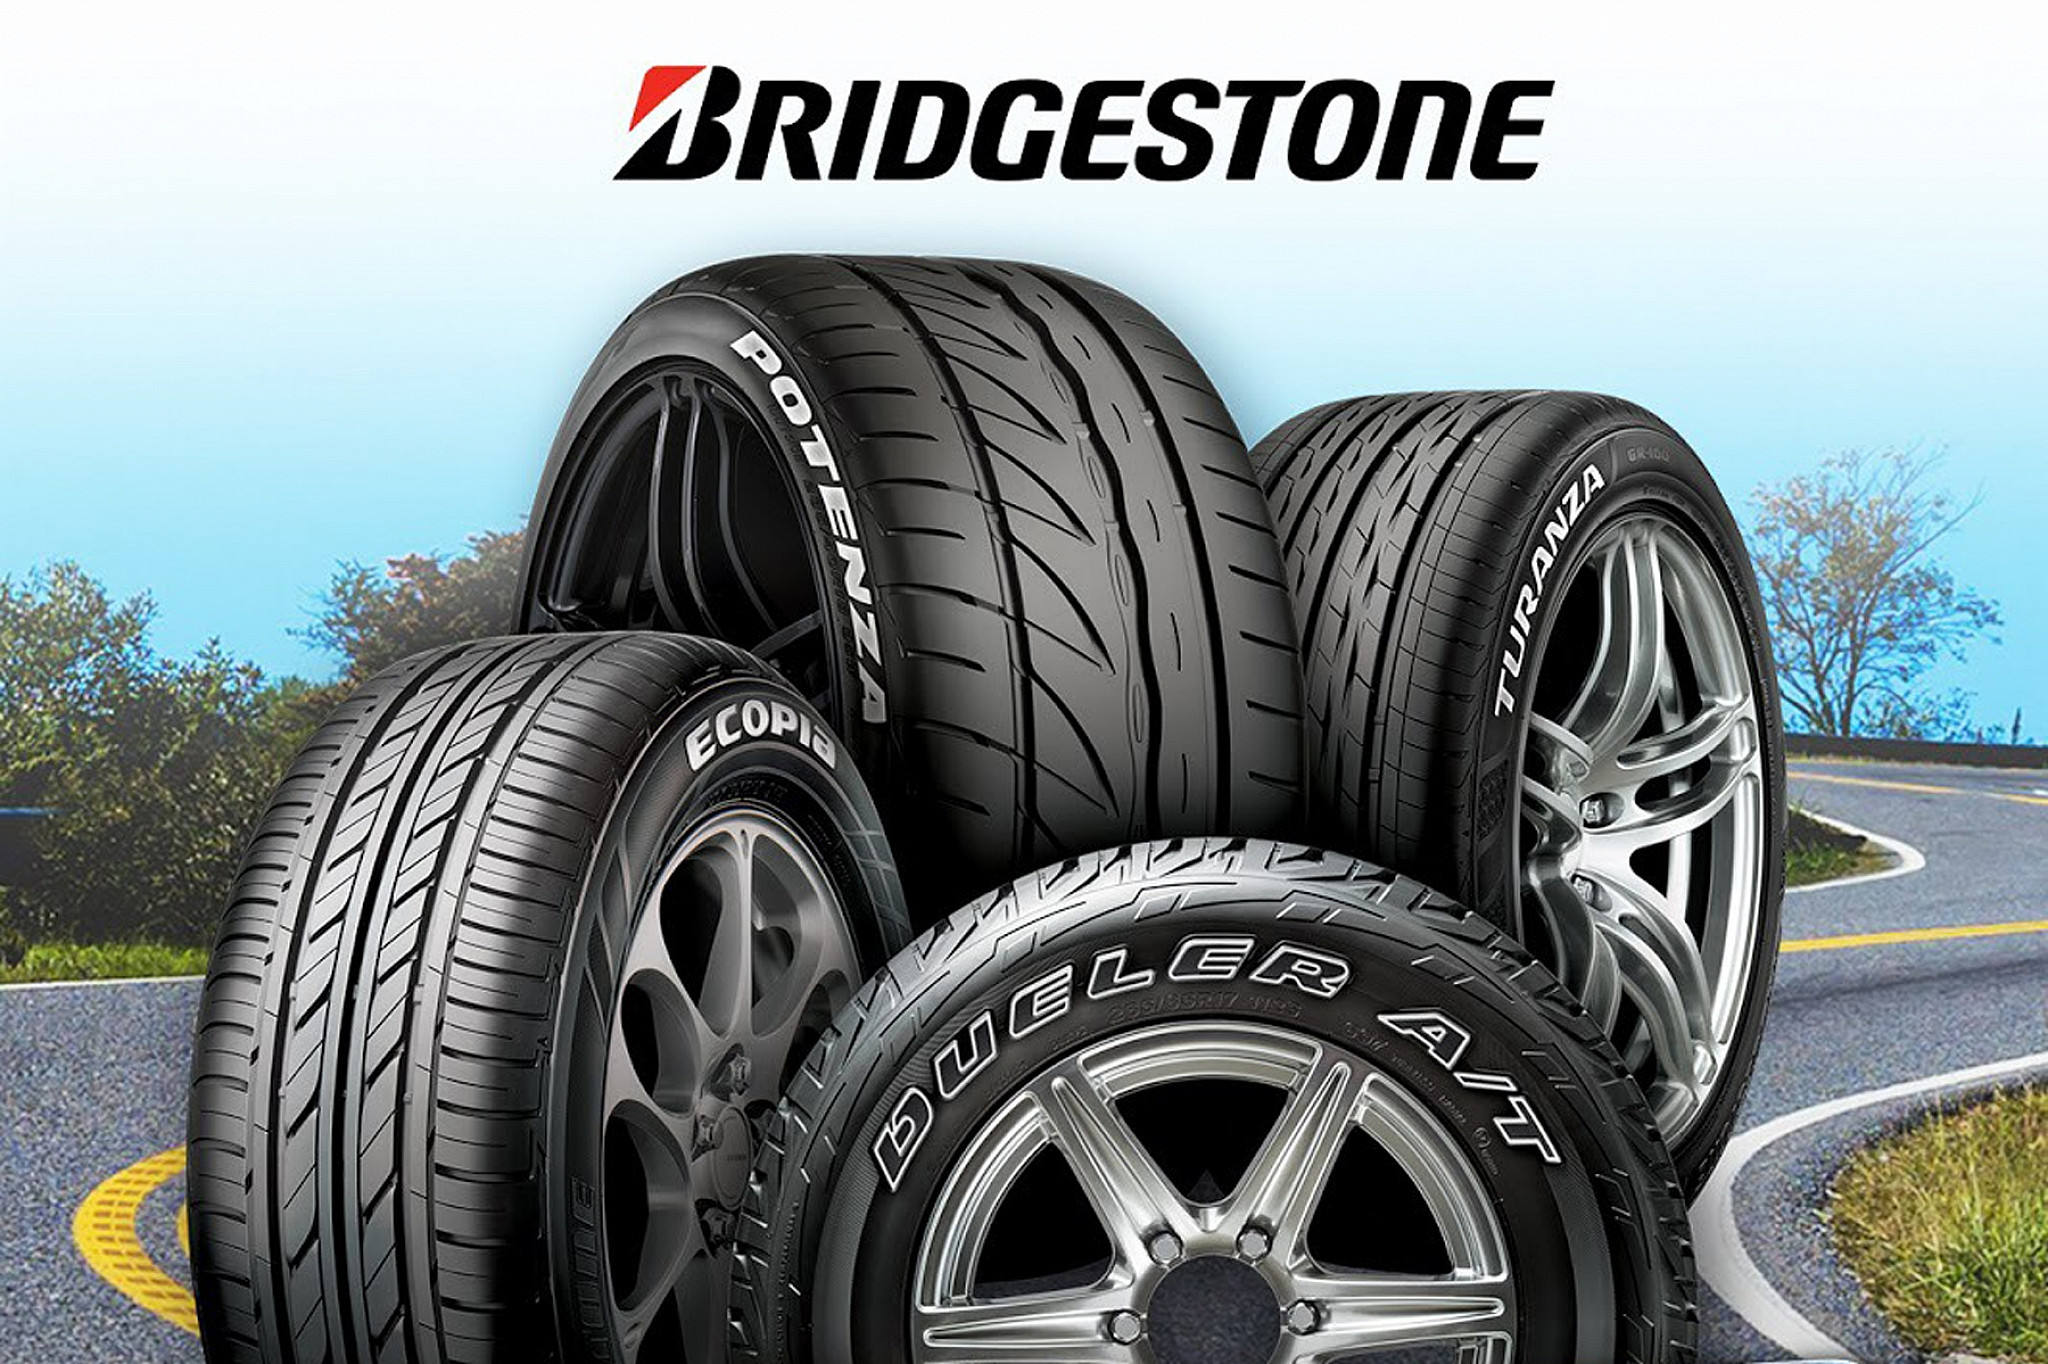 Cegah Penyebaran Covid-19 Bridgestone Palembang Berikan Layanan Ke Rumah Pelanggan